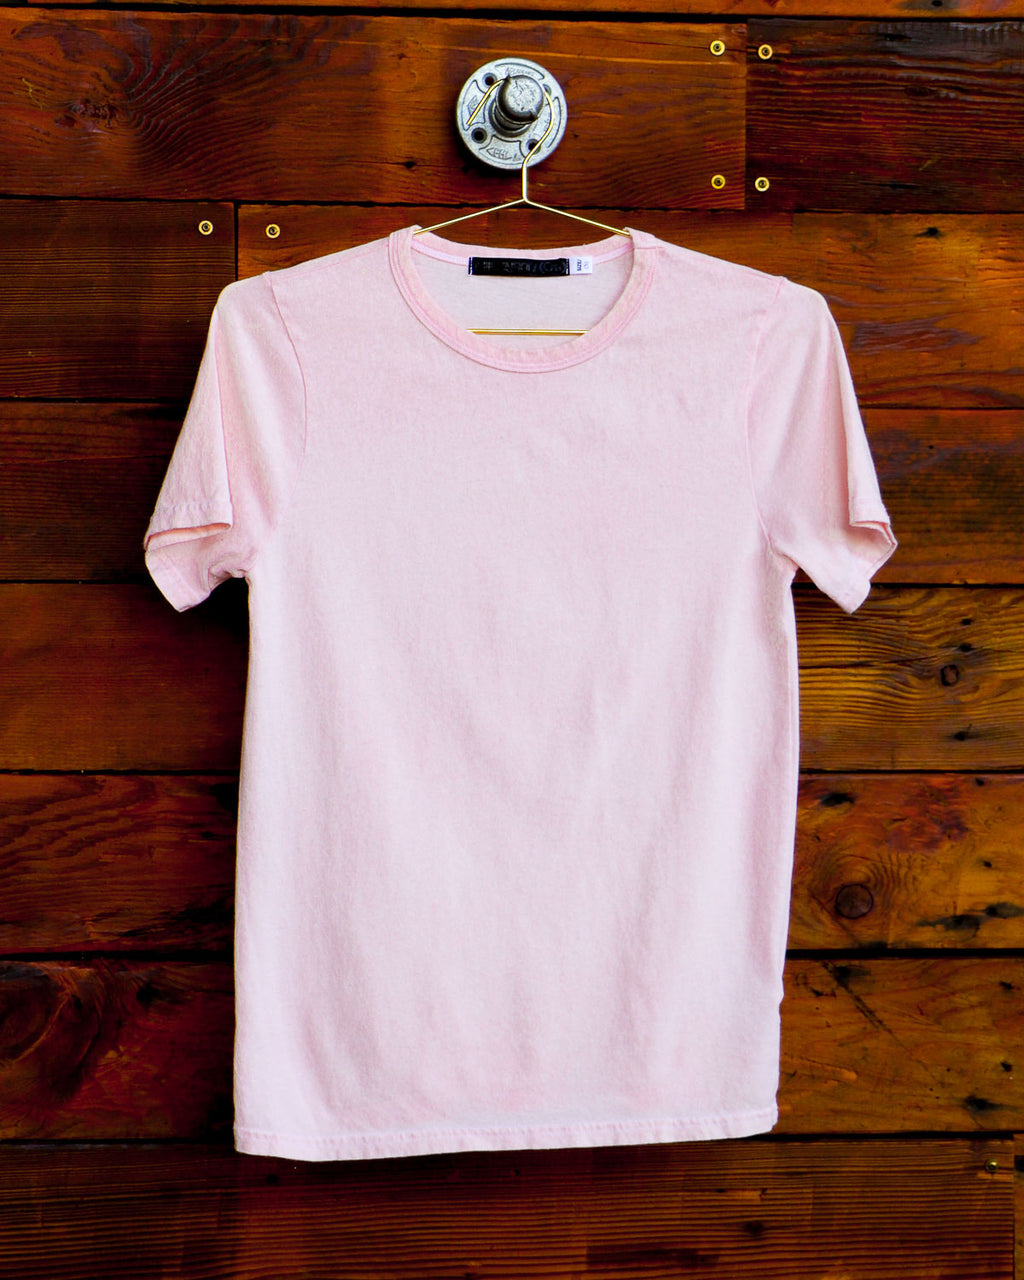 Light pink t-shirt hanging on wood wall